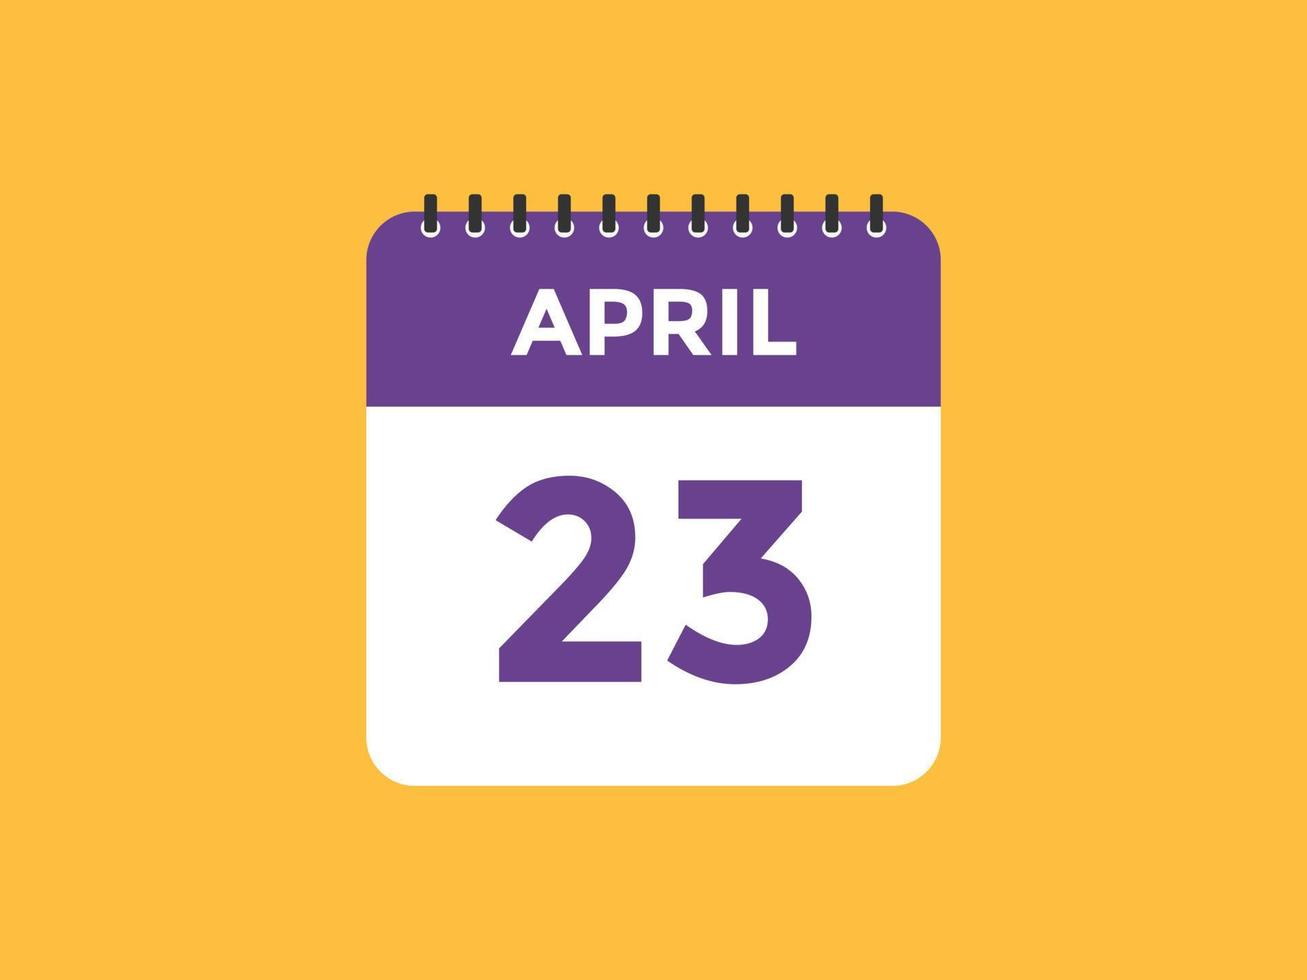 april 23 kalender påminnelse. 23: e april dagligen kalender ikon mall. kalender 23: e april ikon design mall. vektor illustration